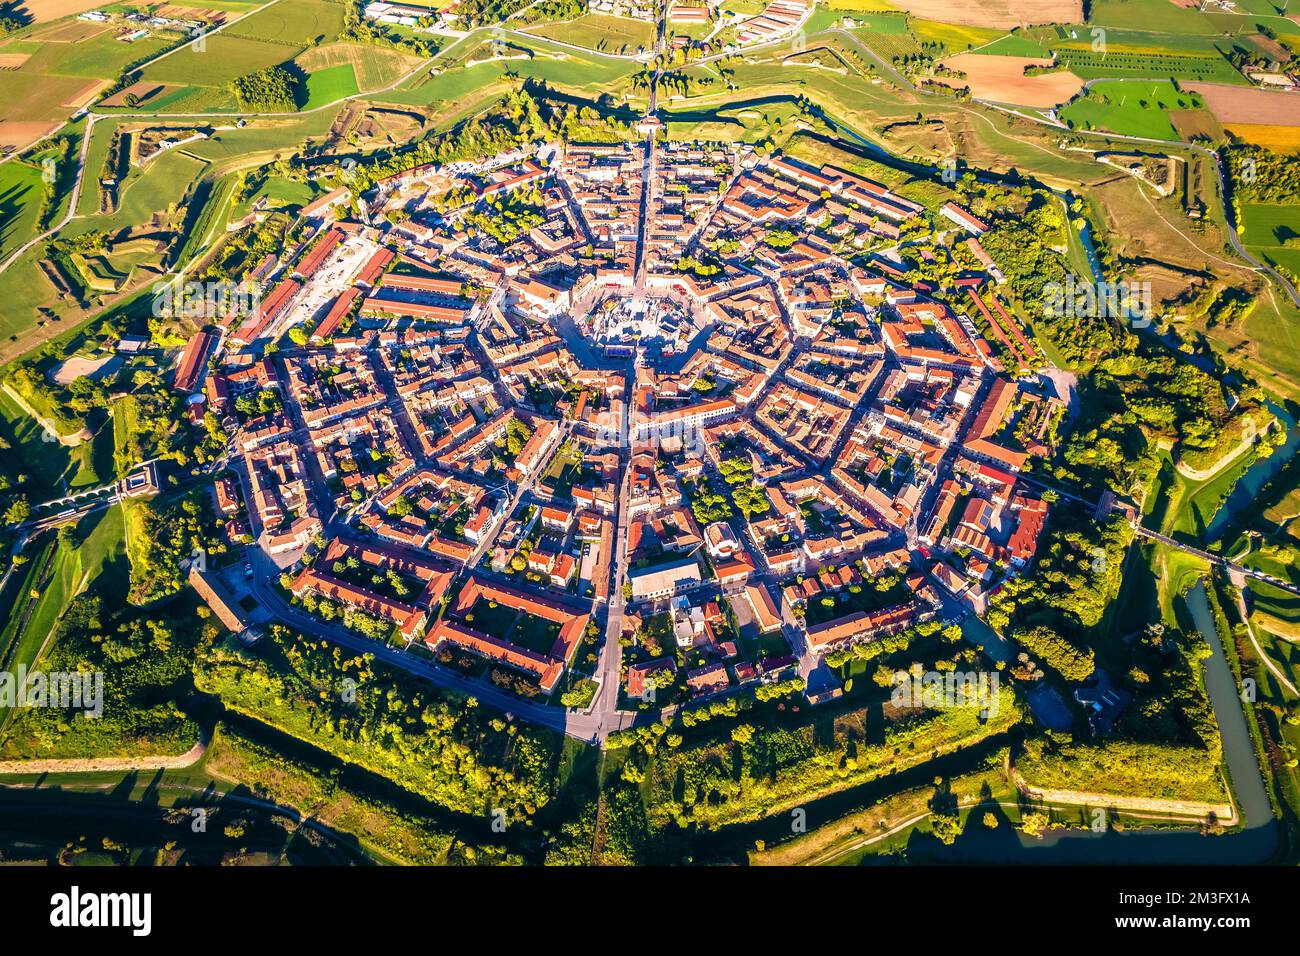 Star fort town of Palmanova aerial view, UNESCO world heritage site in Friuli Venezia Giulia region of Italy Stock Photo